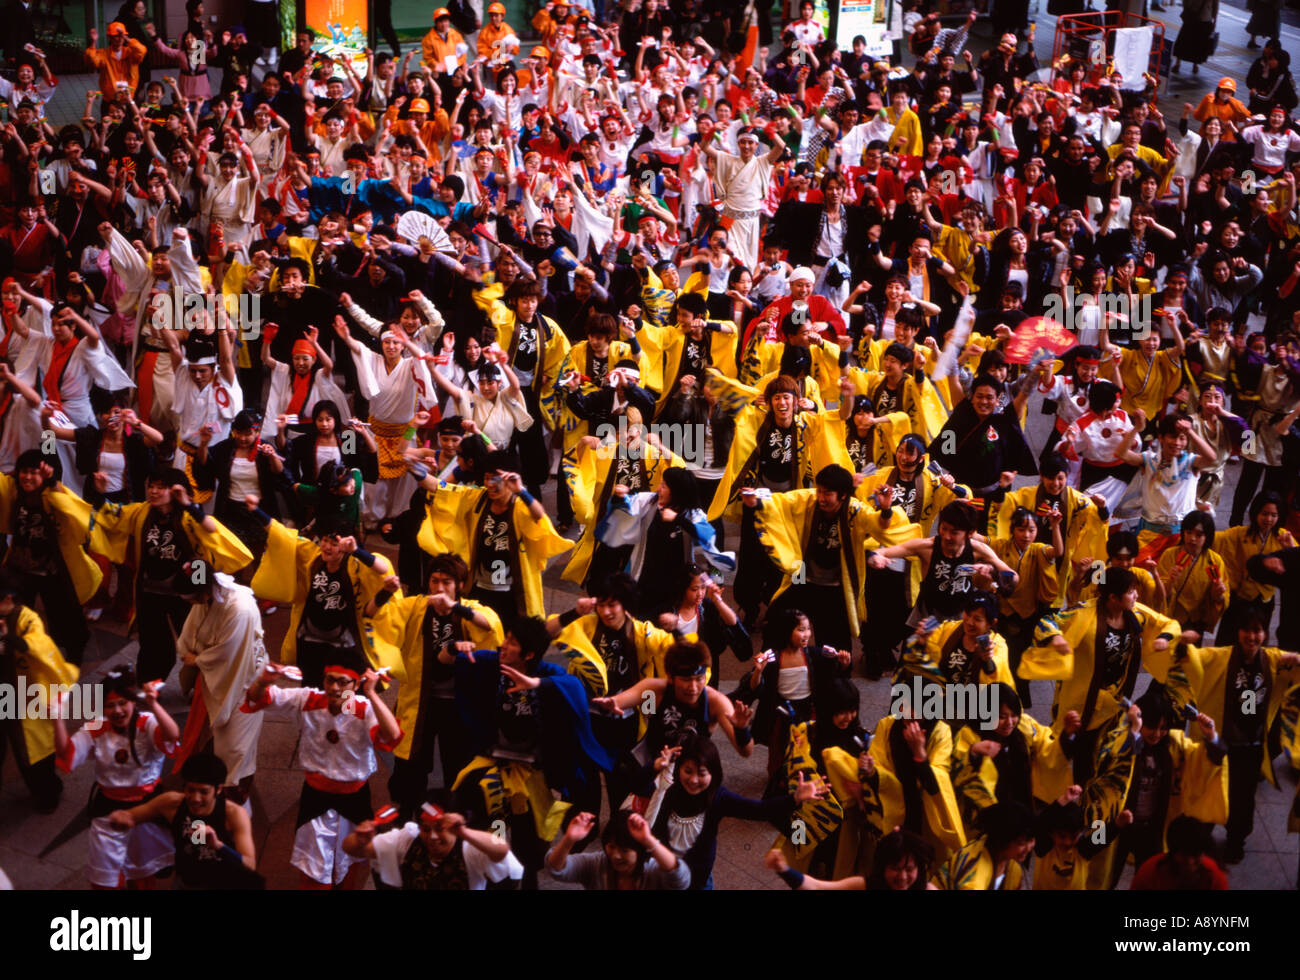 Crowd of dancers taking part in the Yosakoi dance festival in Nagasaki, Japan Stock Photo